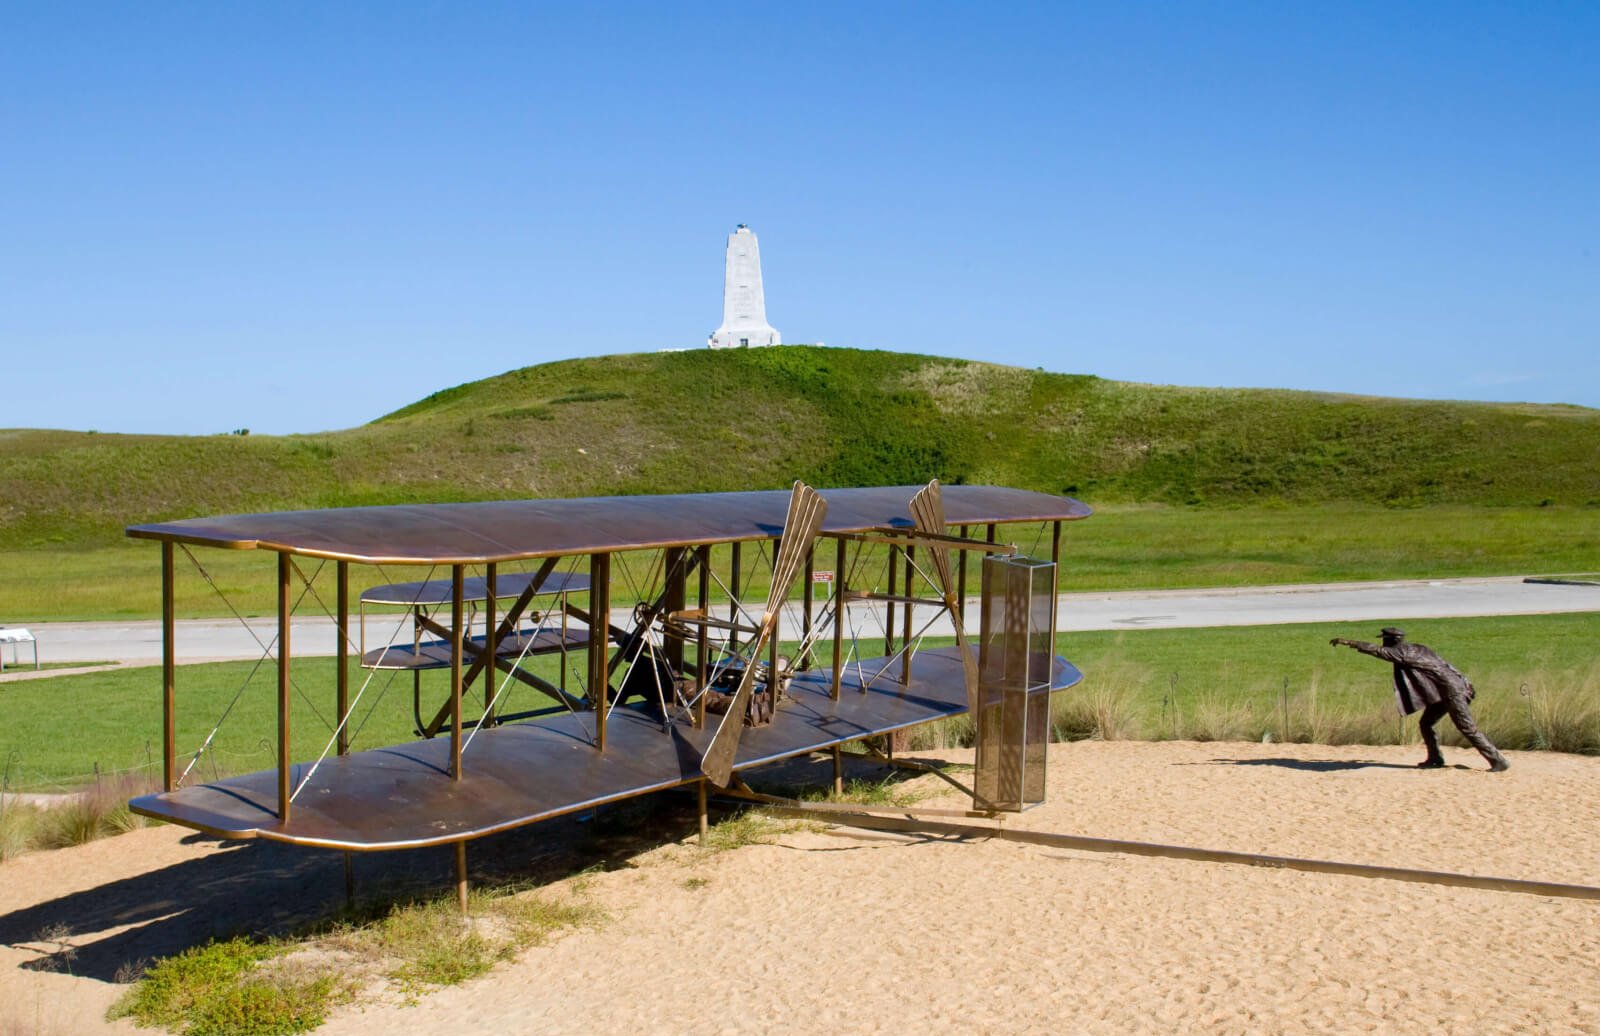 Wright Brothers memorial statue at Kill Devil Hills in North Carolina